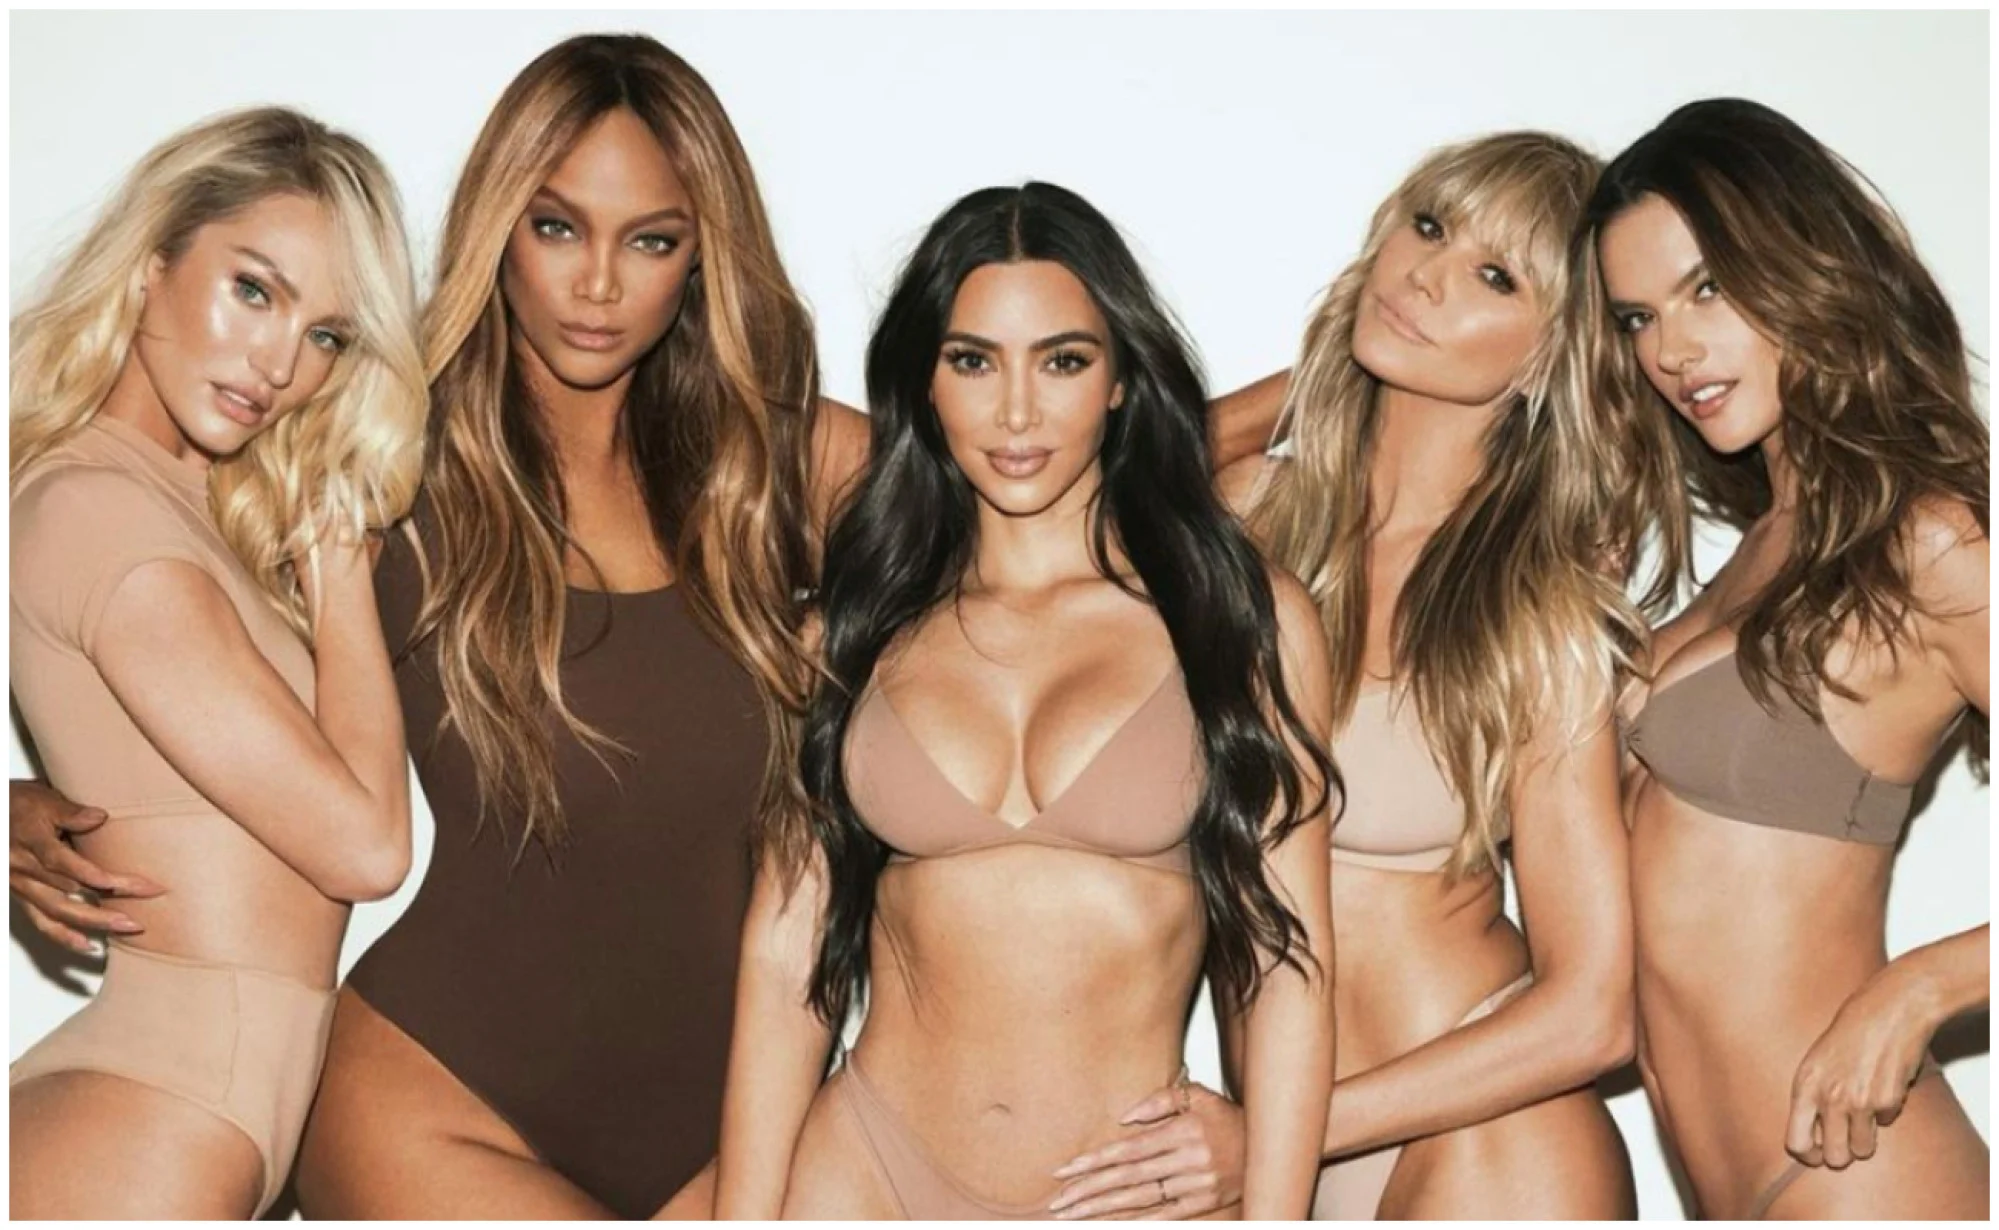 Kim Kardashian has used her star power to make herself millions